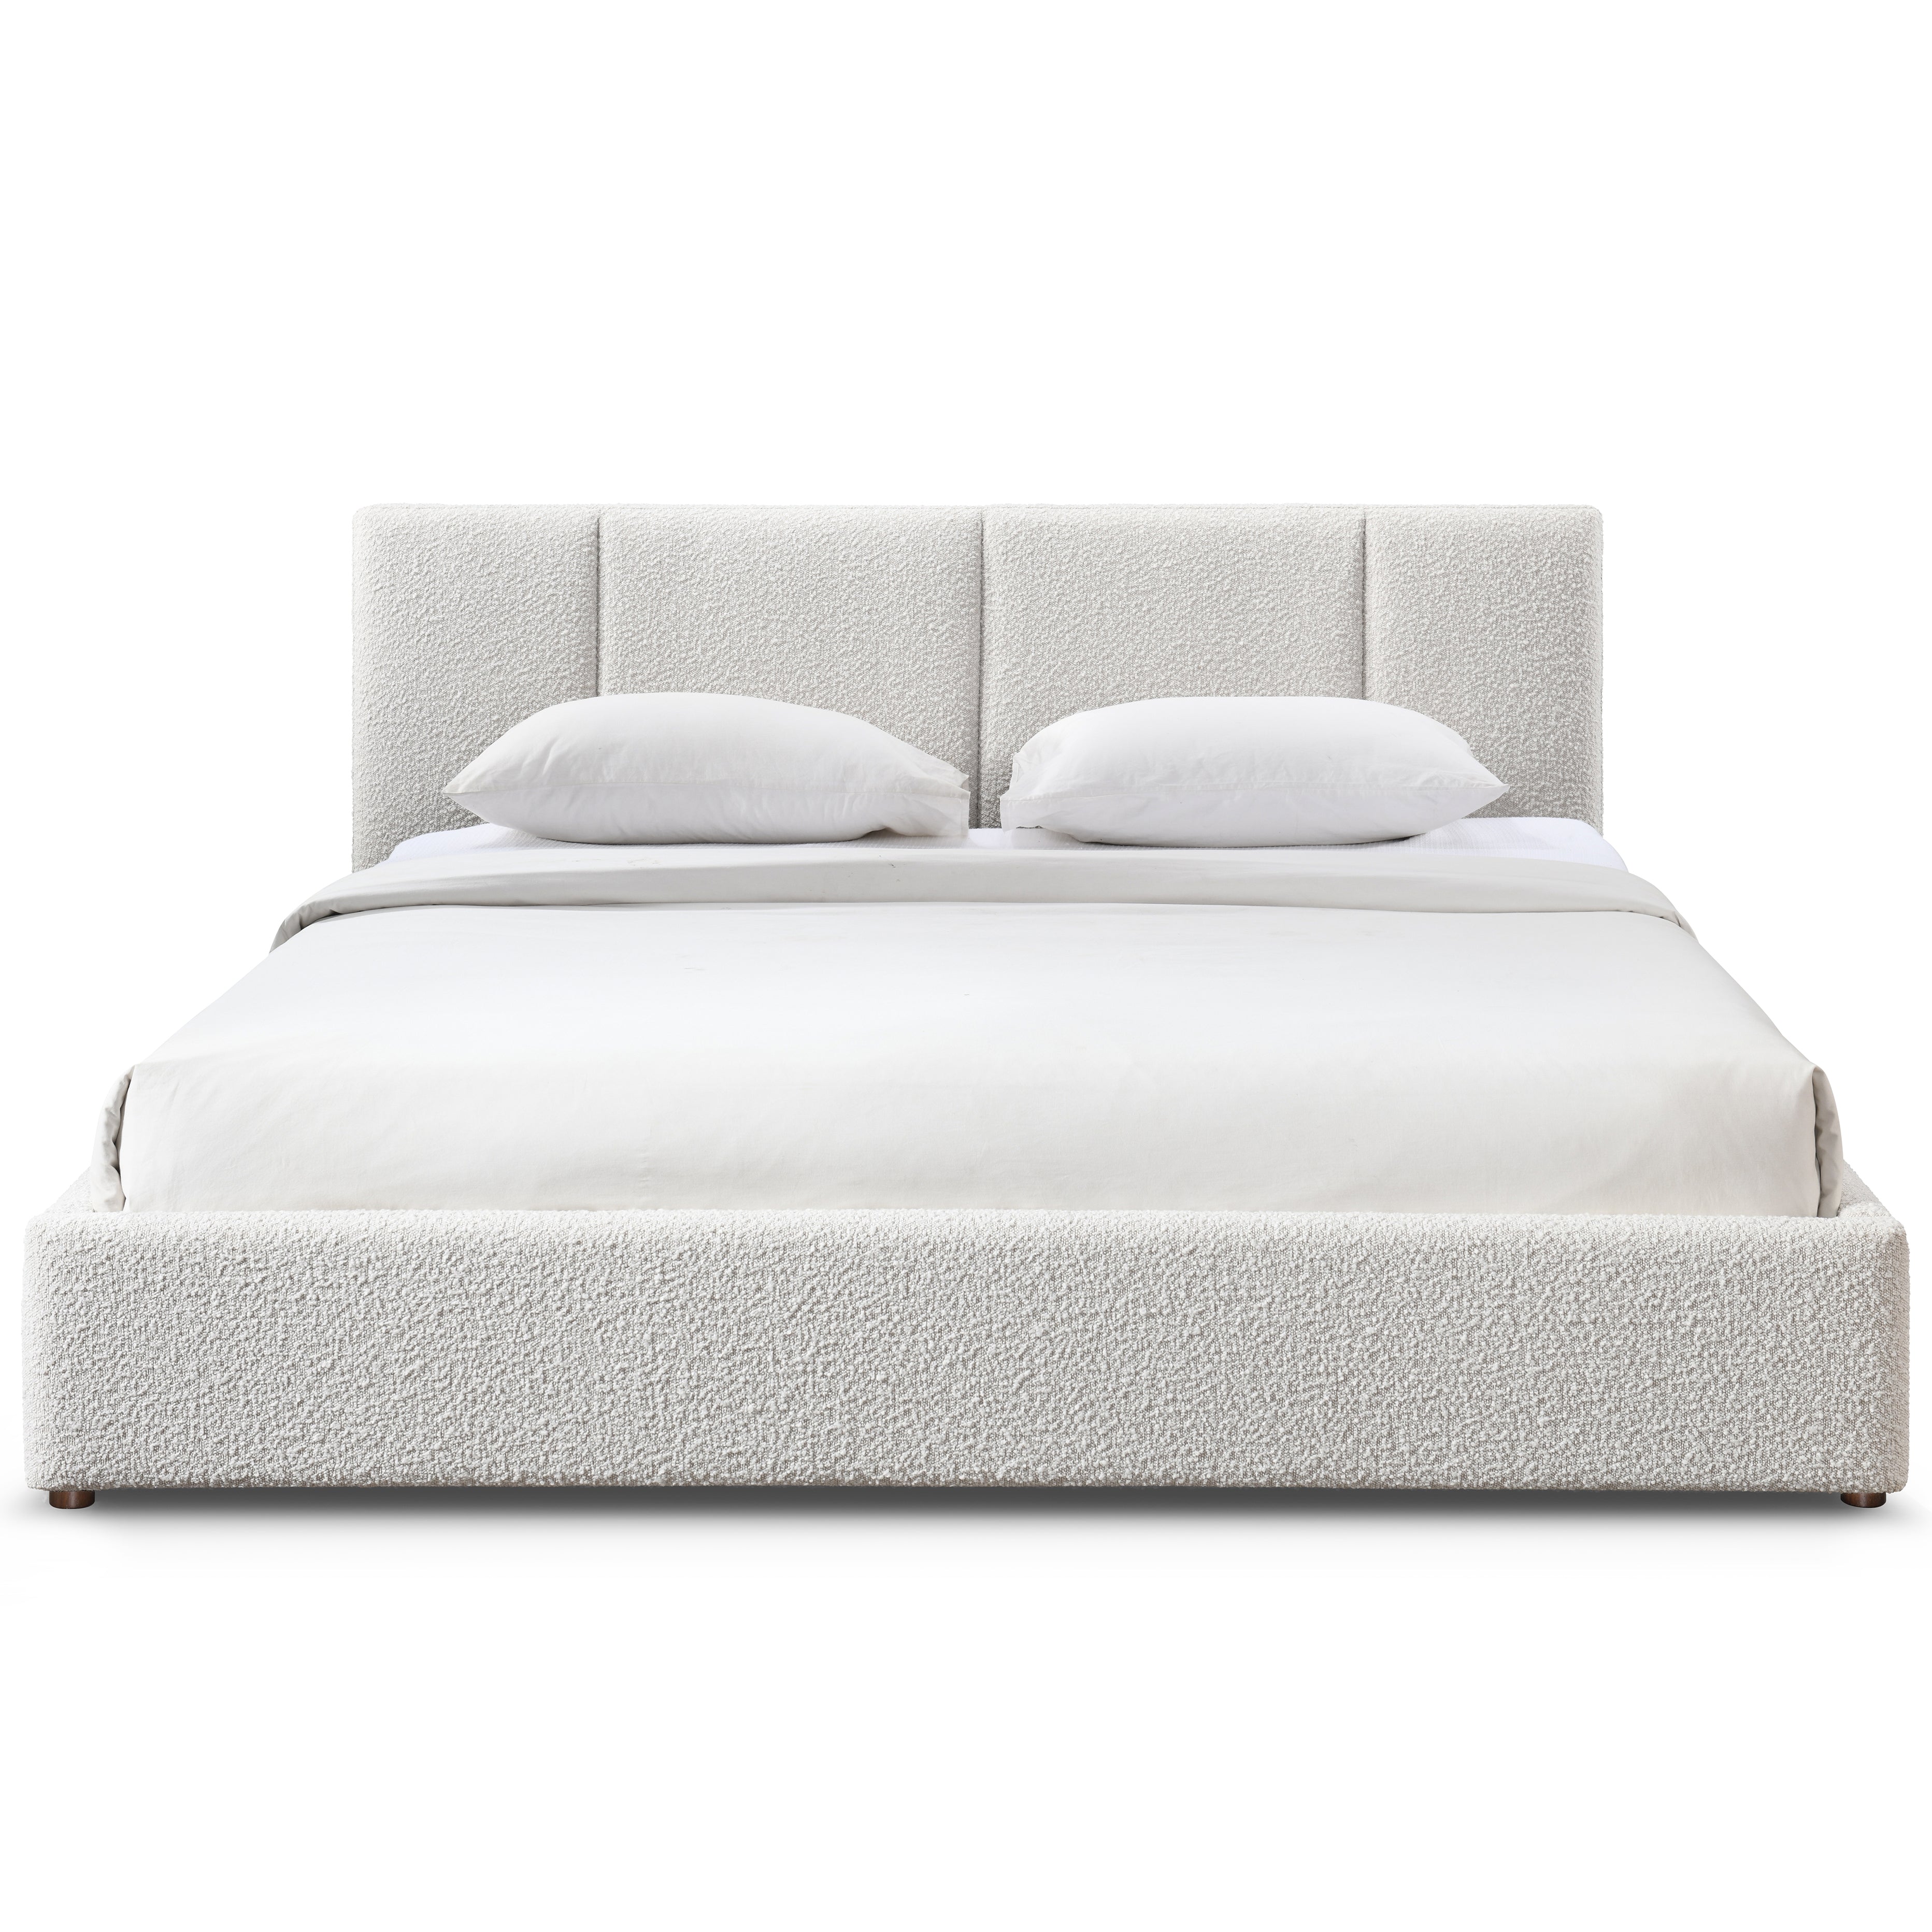 Venice Upholstered Platform King Bed, Cream Beige Boucle Fabric